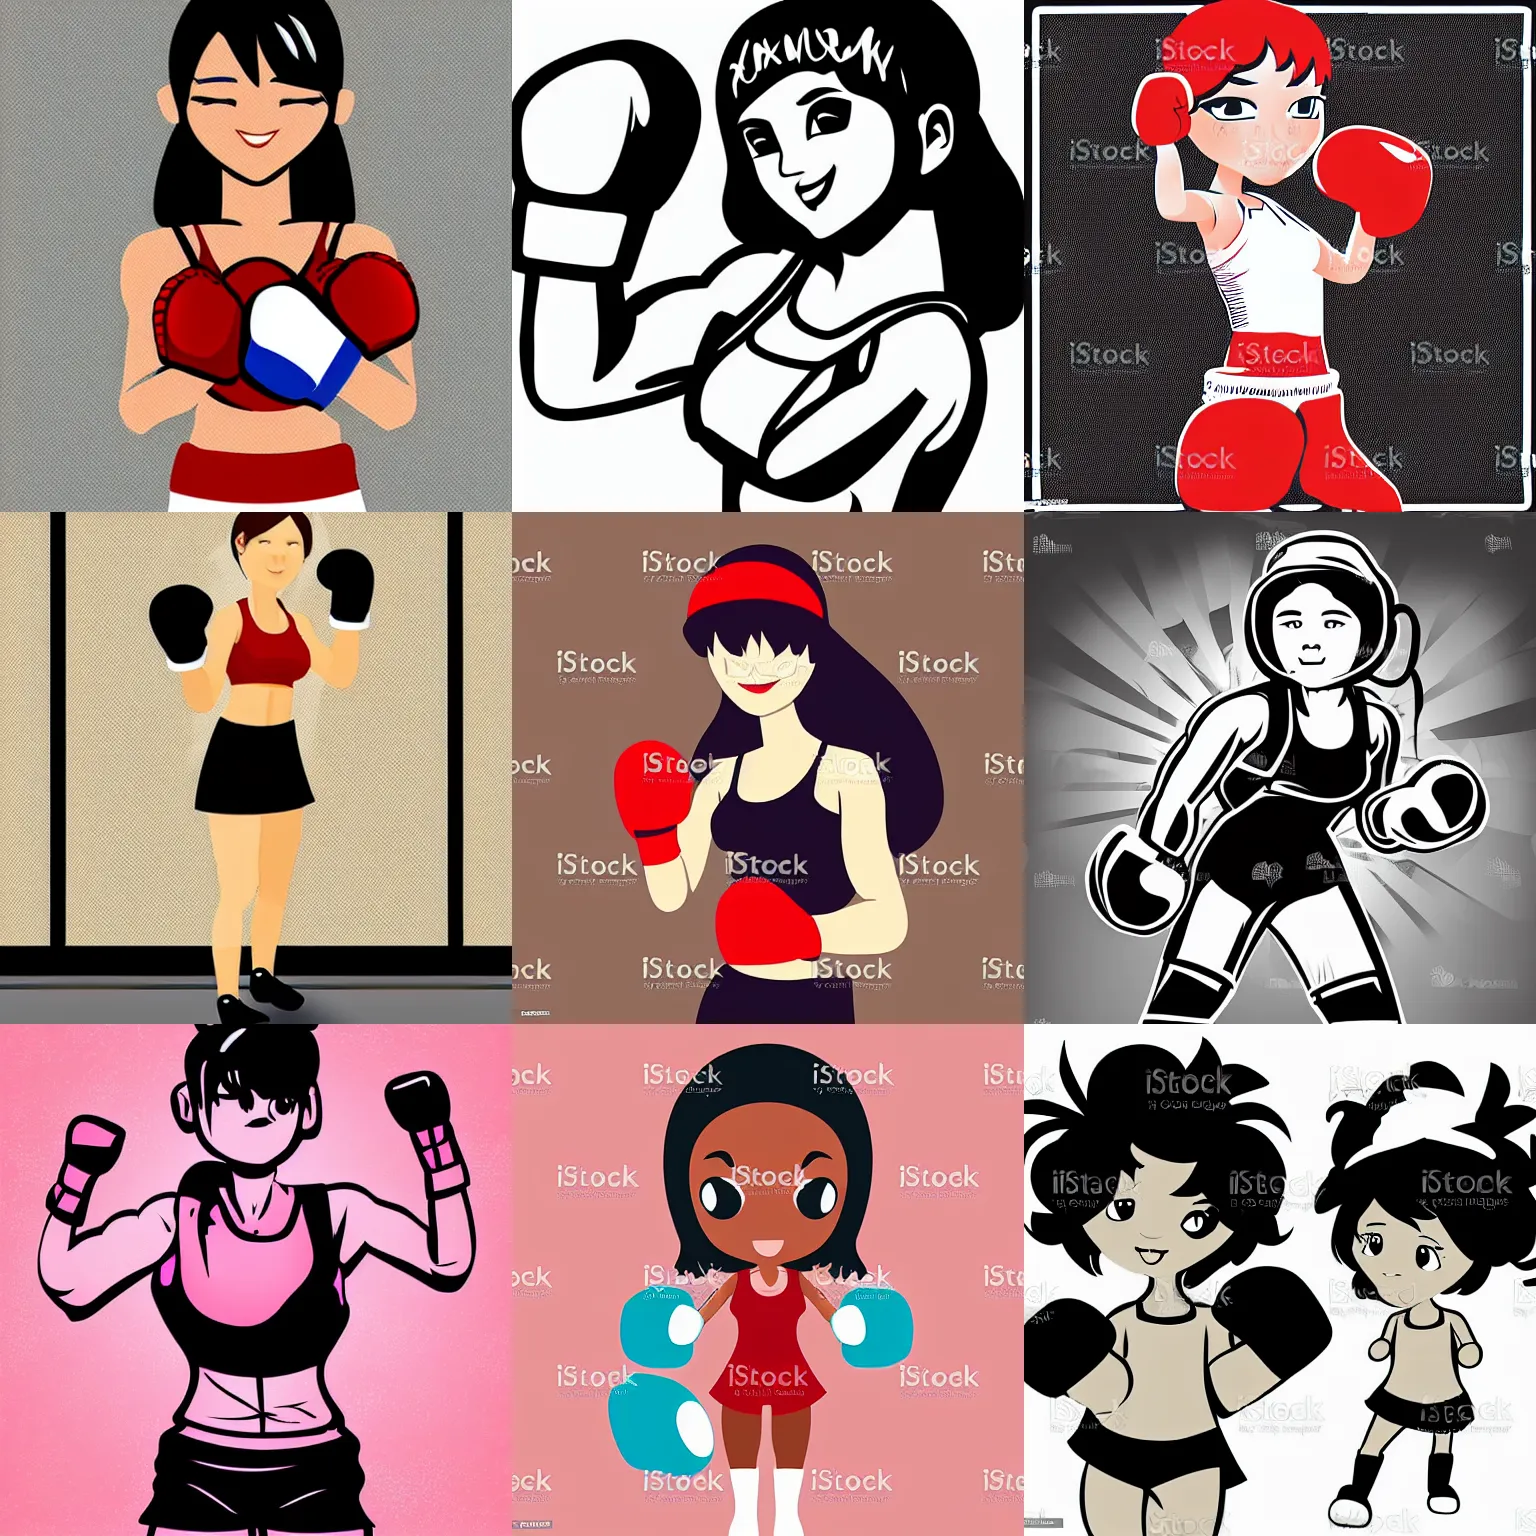 Prompt: cute boxing girl,vector art